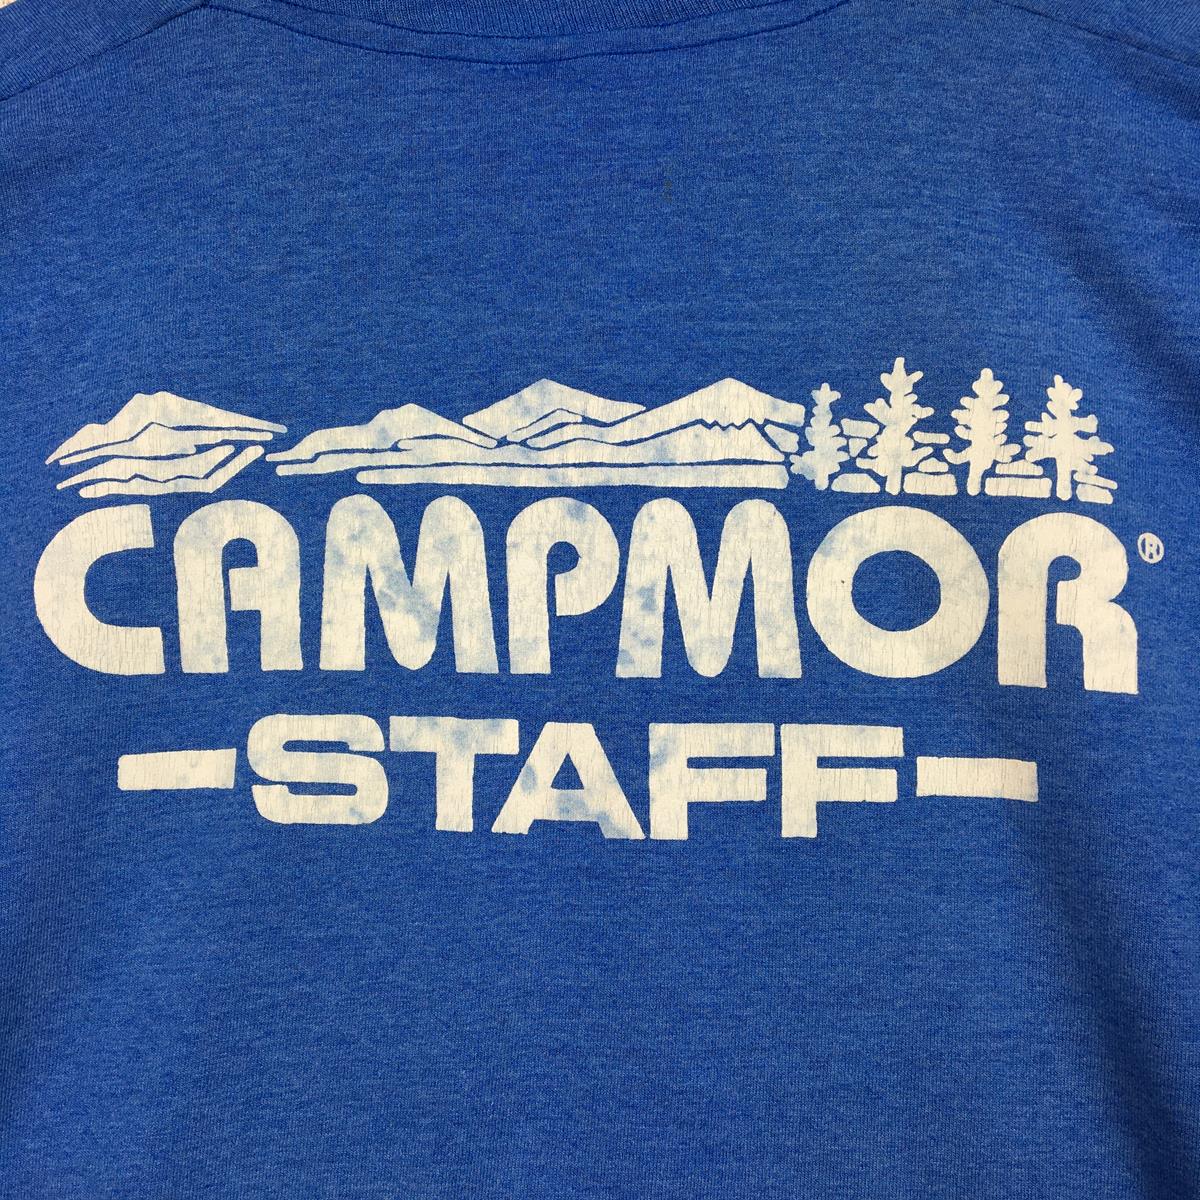 【MEN's L】 1990s キャンプモア スタッフ Tシャツ Campmor Staff T-Shirts アメリカ製 米国ニュージャージー州のアウトドアショップ 希少なアウトドアTシャツ フルーツオブザルームボディ 非売品 ビンテージ 入手困難 ブルー系